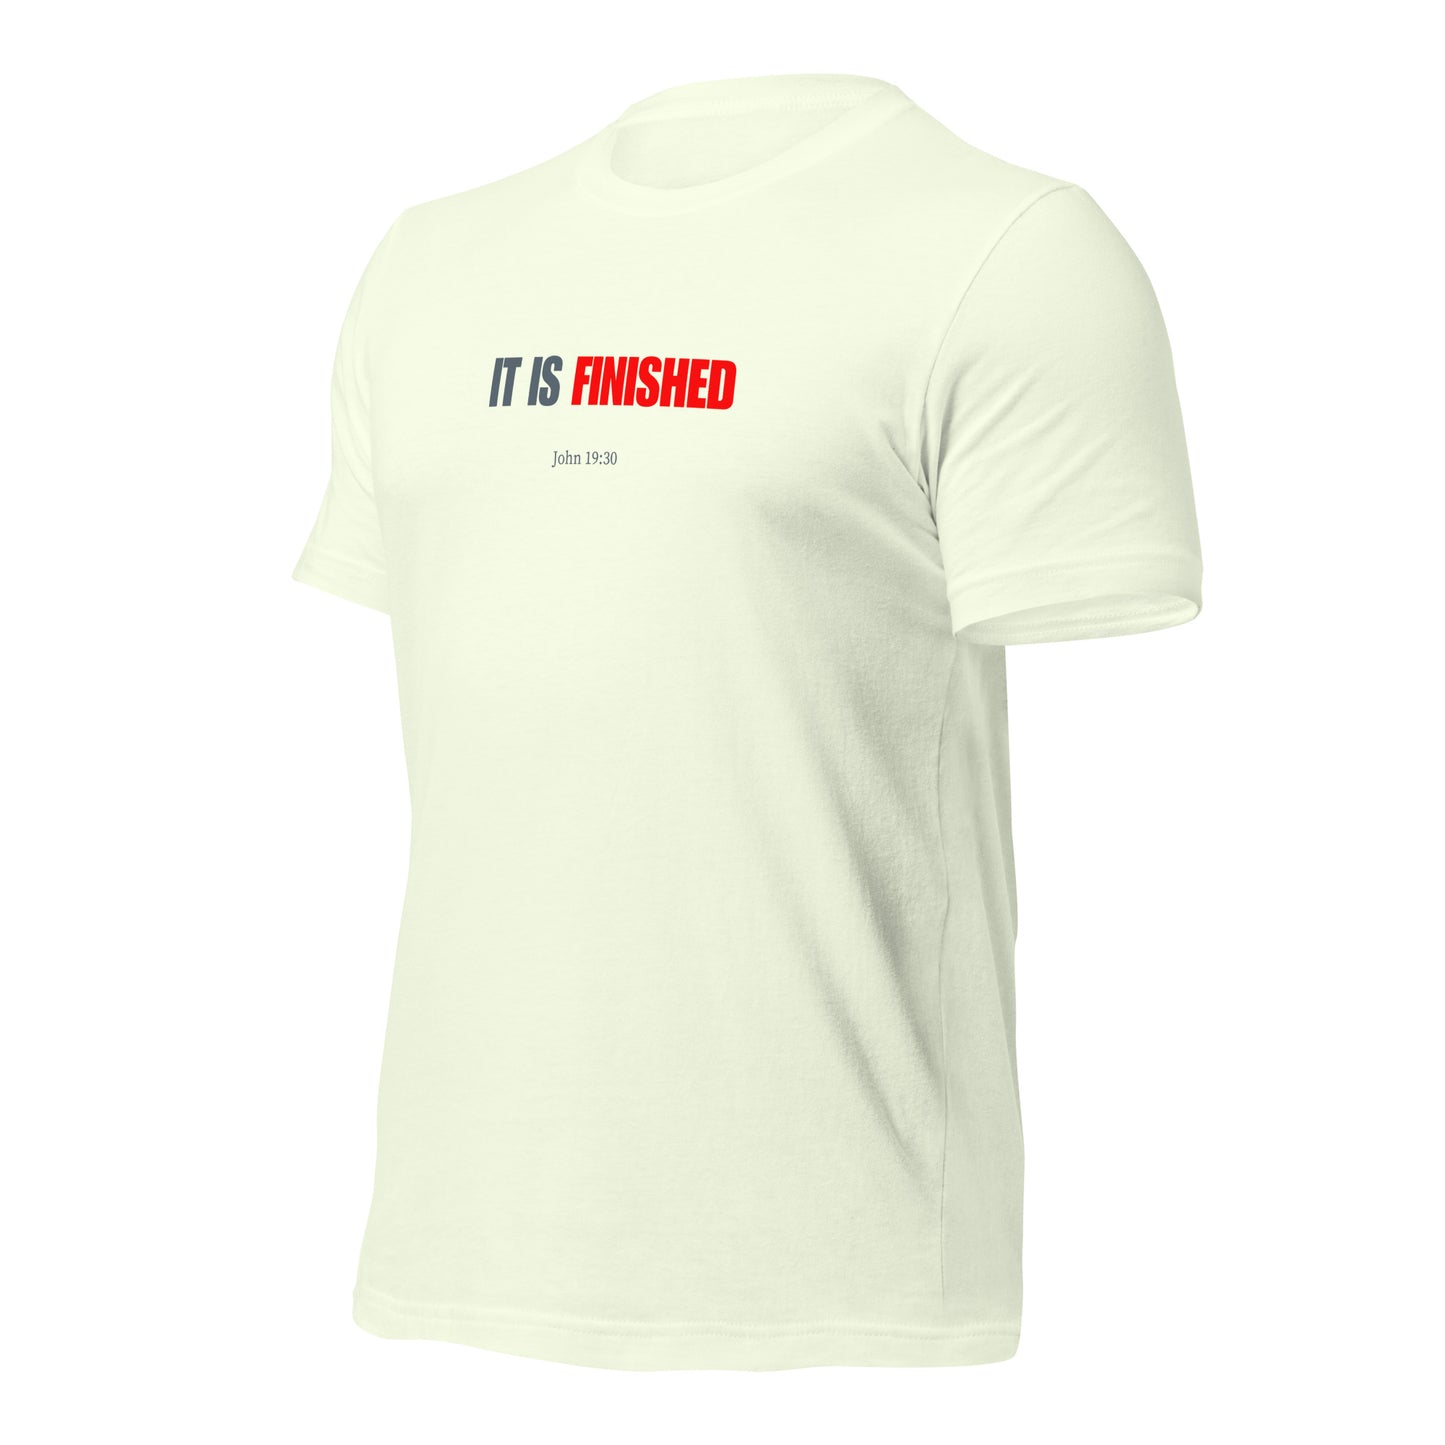 "It is Finished" Unisex T-shirt